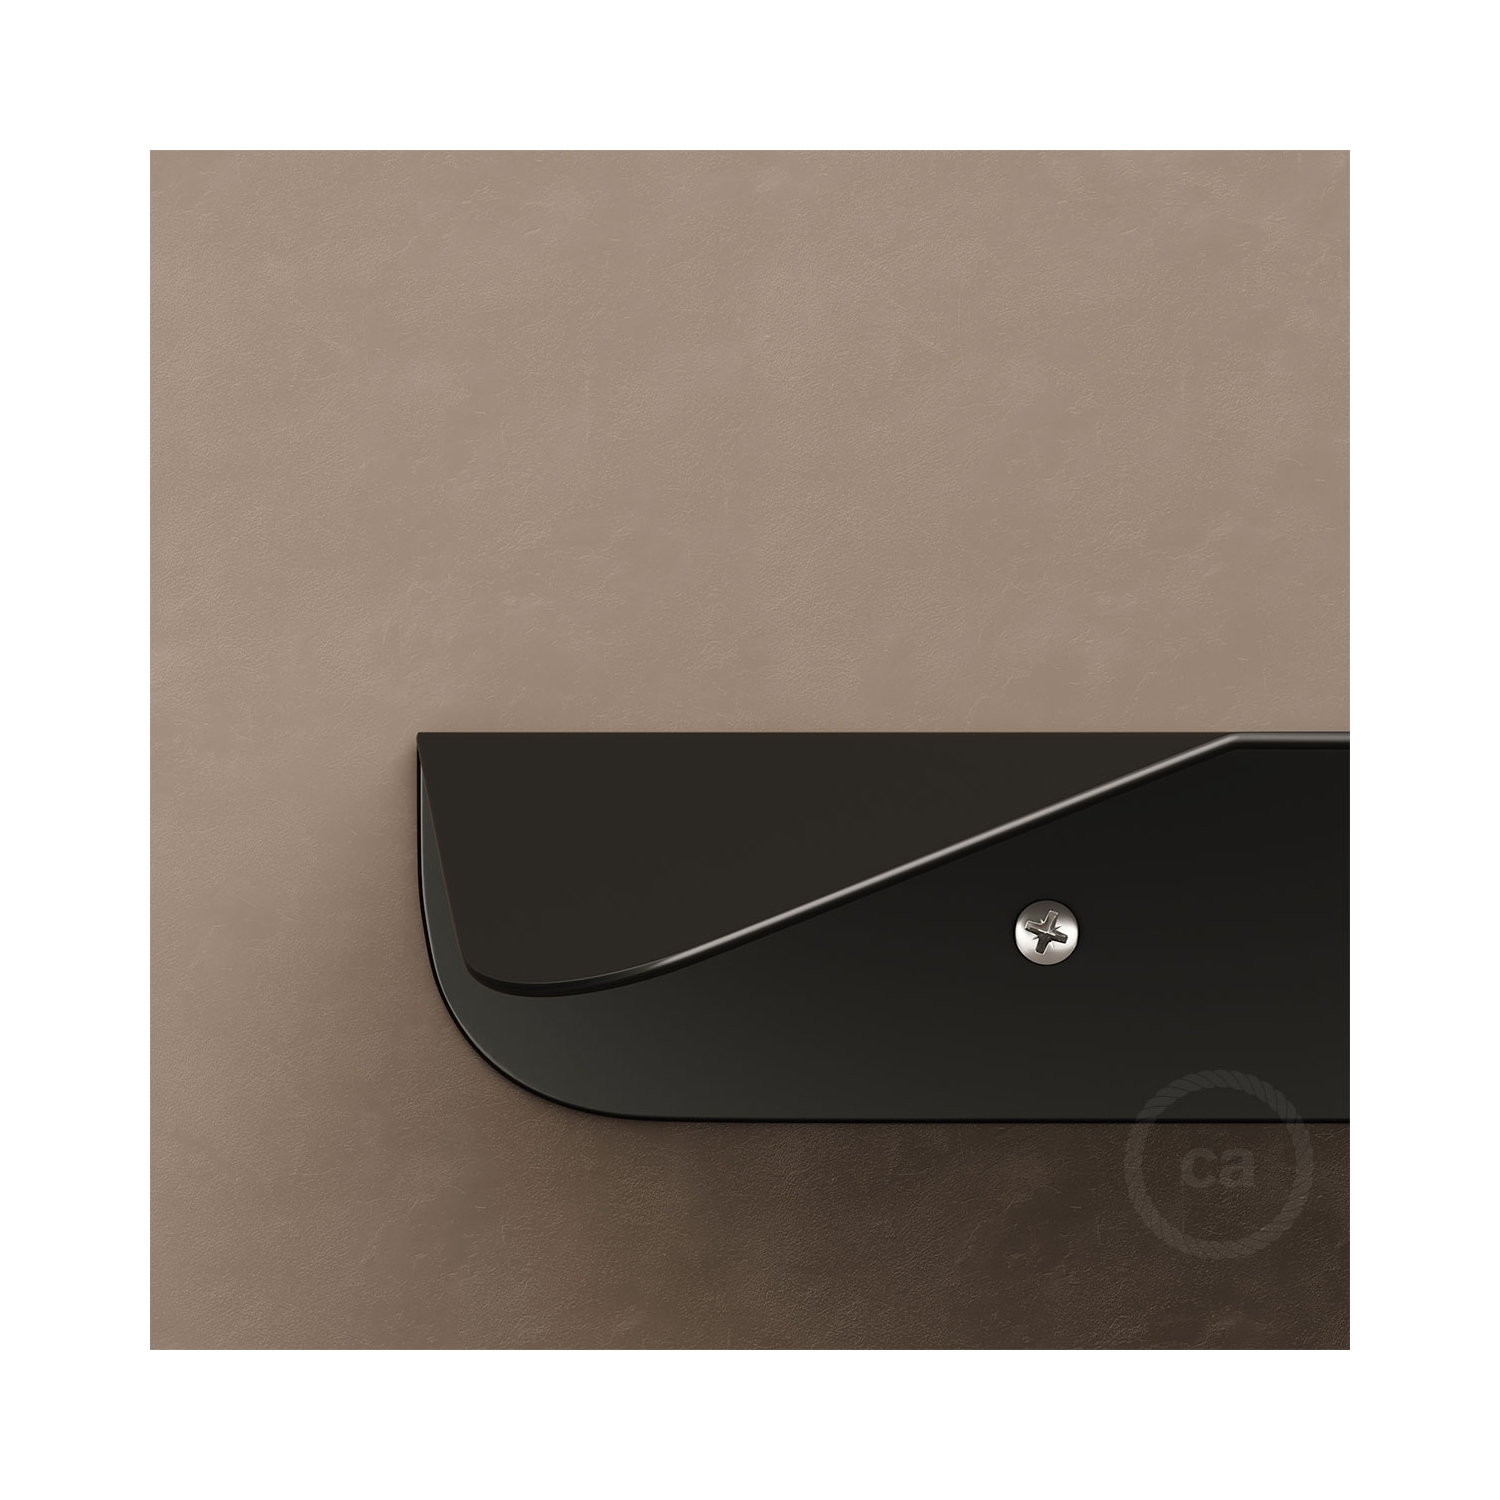 Magnetico®-Shelf Black, metal shelf for Magnetico®-Plug